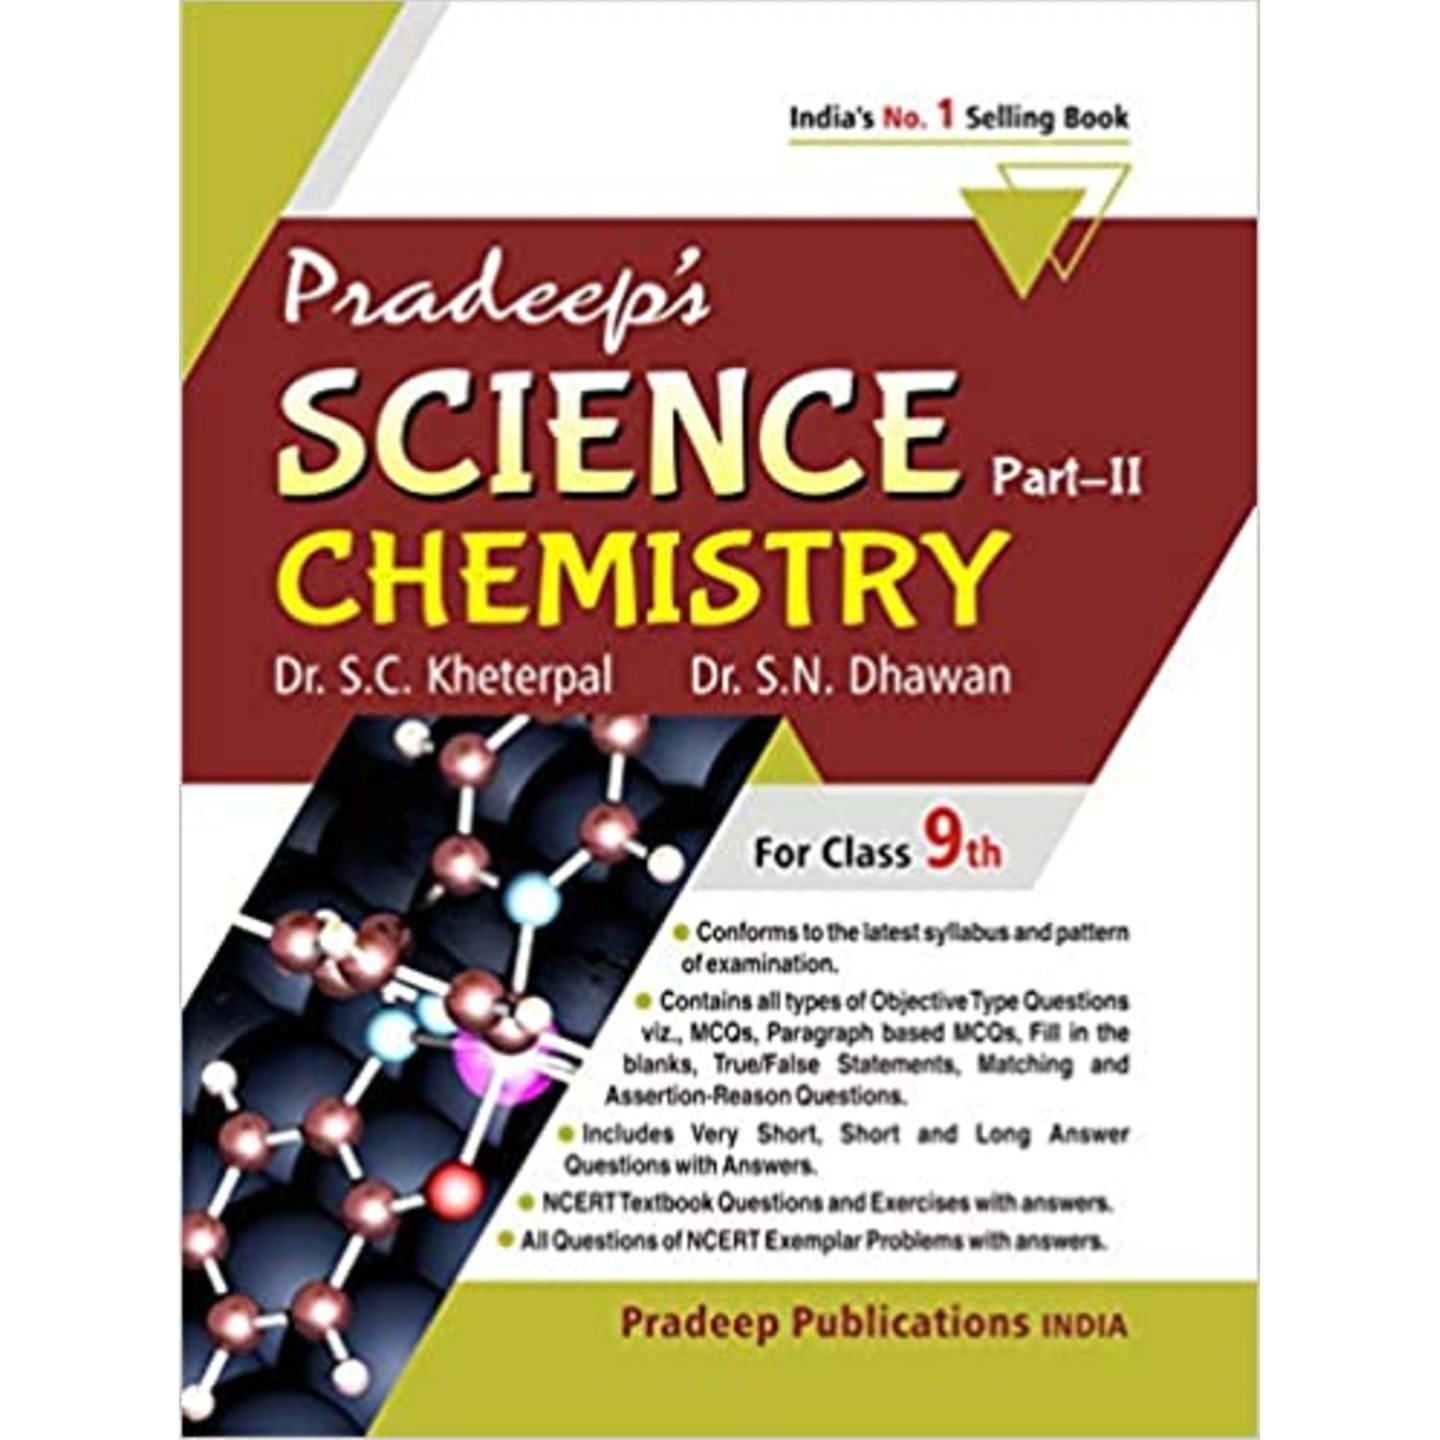 Pradeeps Science Part II Chemistry for Class 9